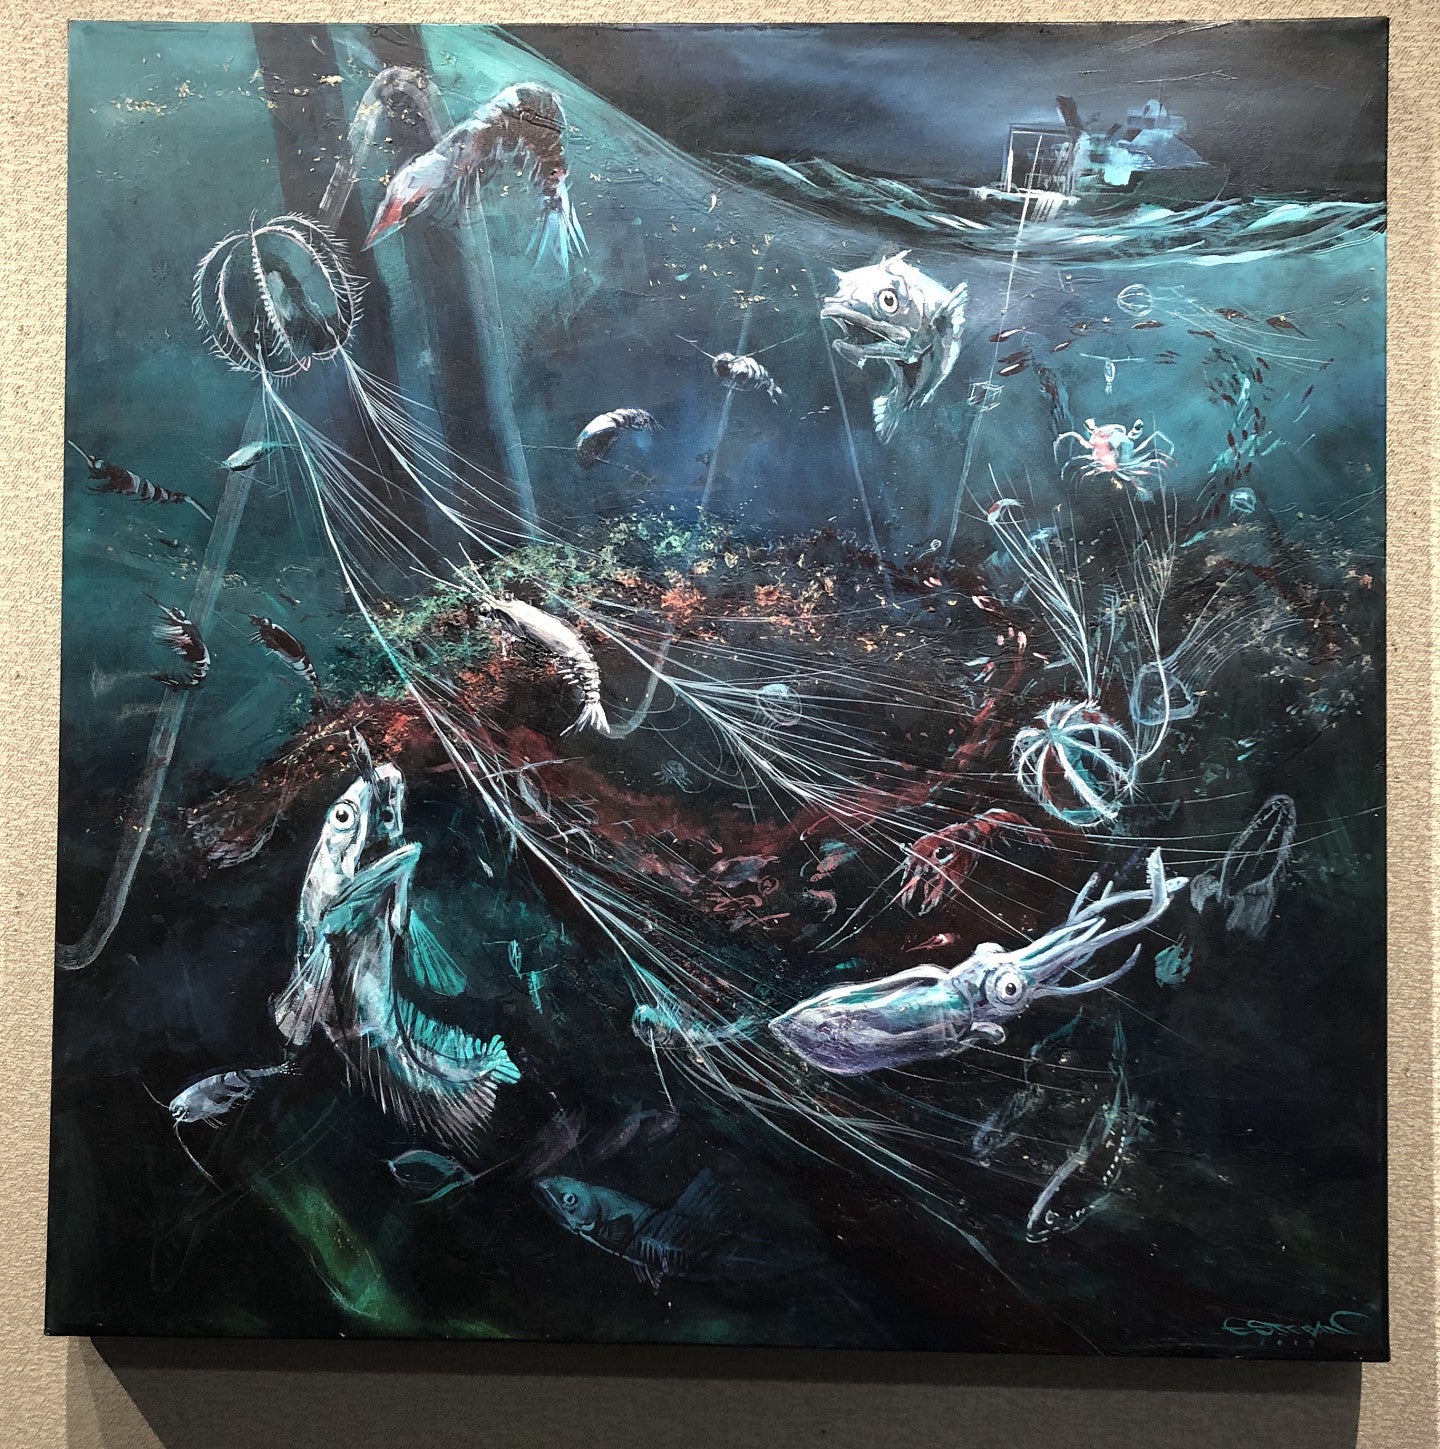 painting of aquatic organisms underwater below a boat